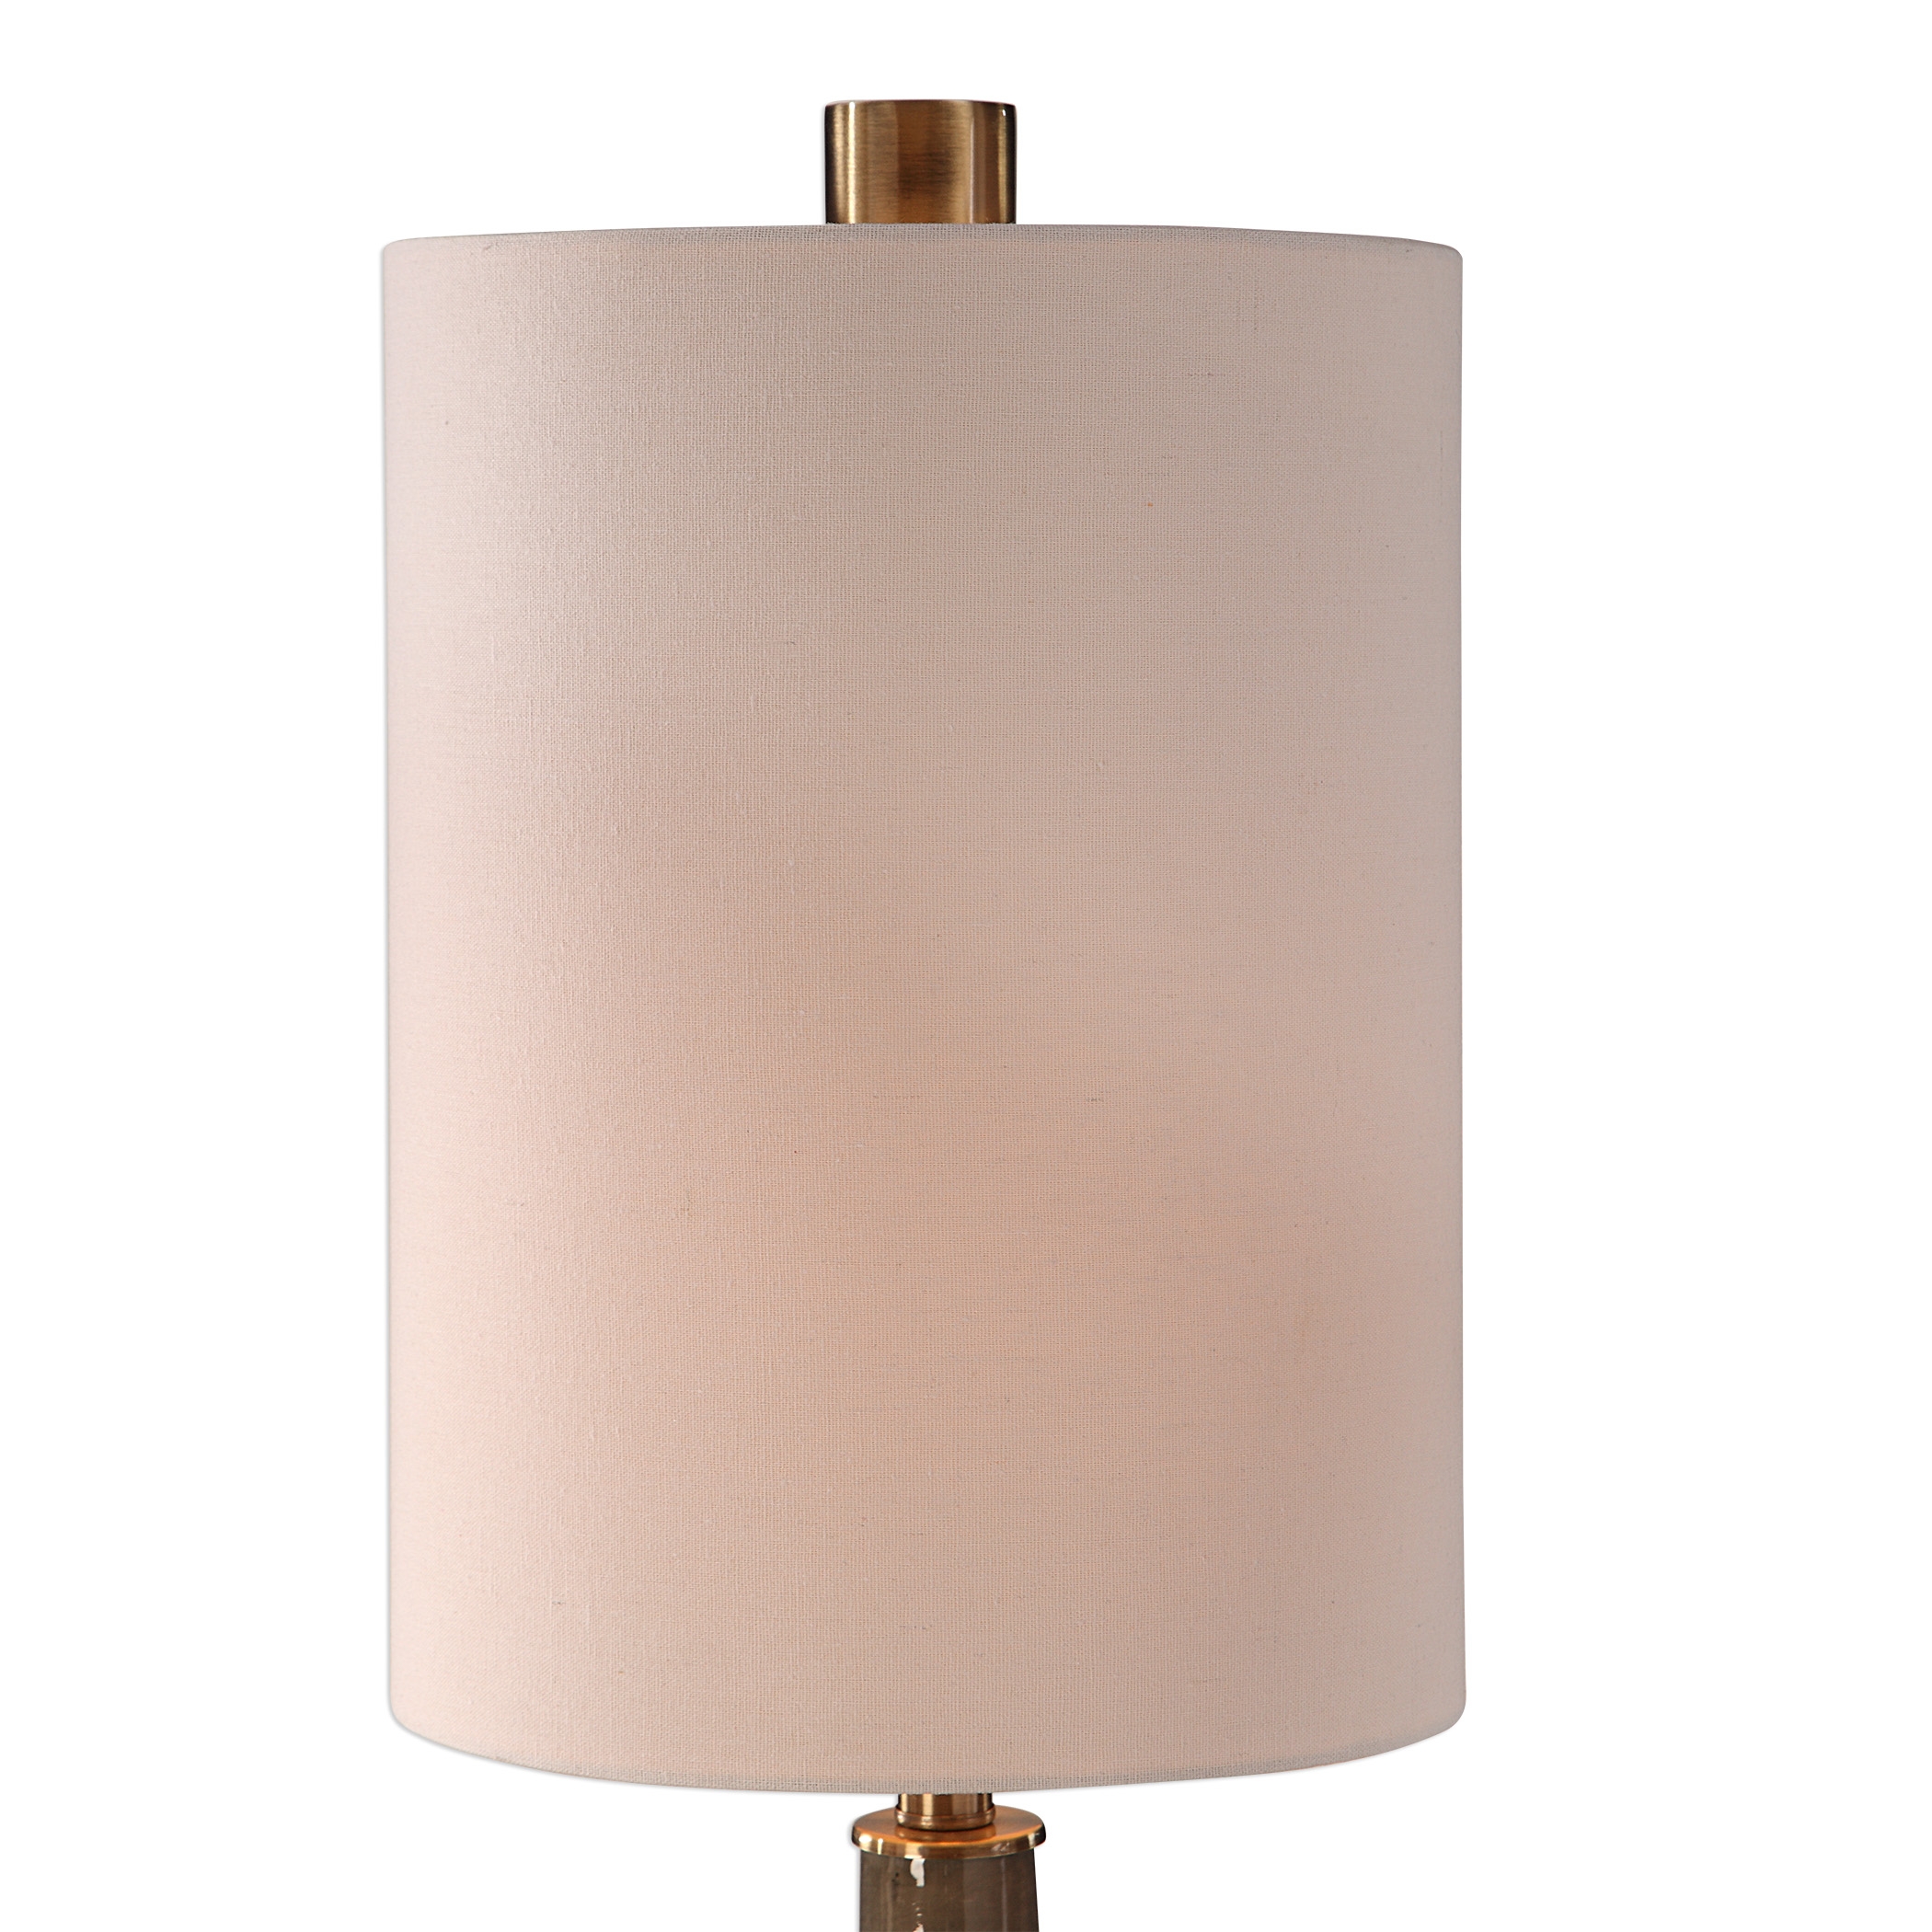 Darrin Gray Table Lamp - Image 2